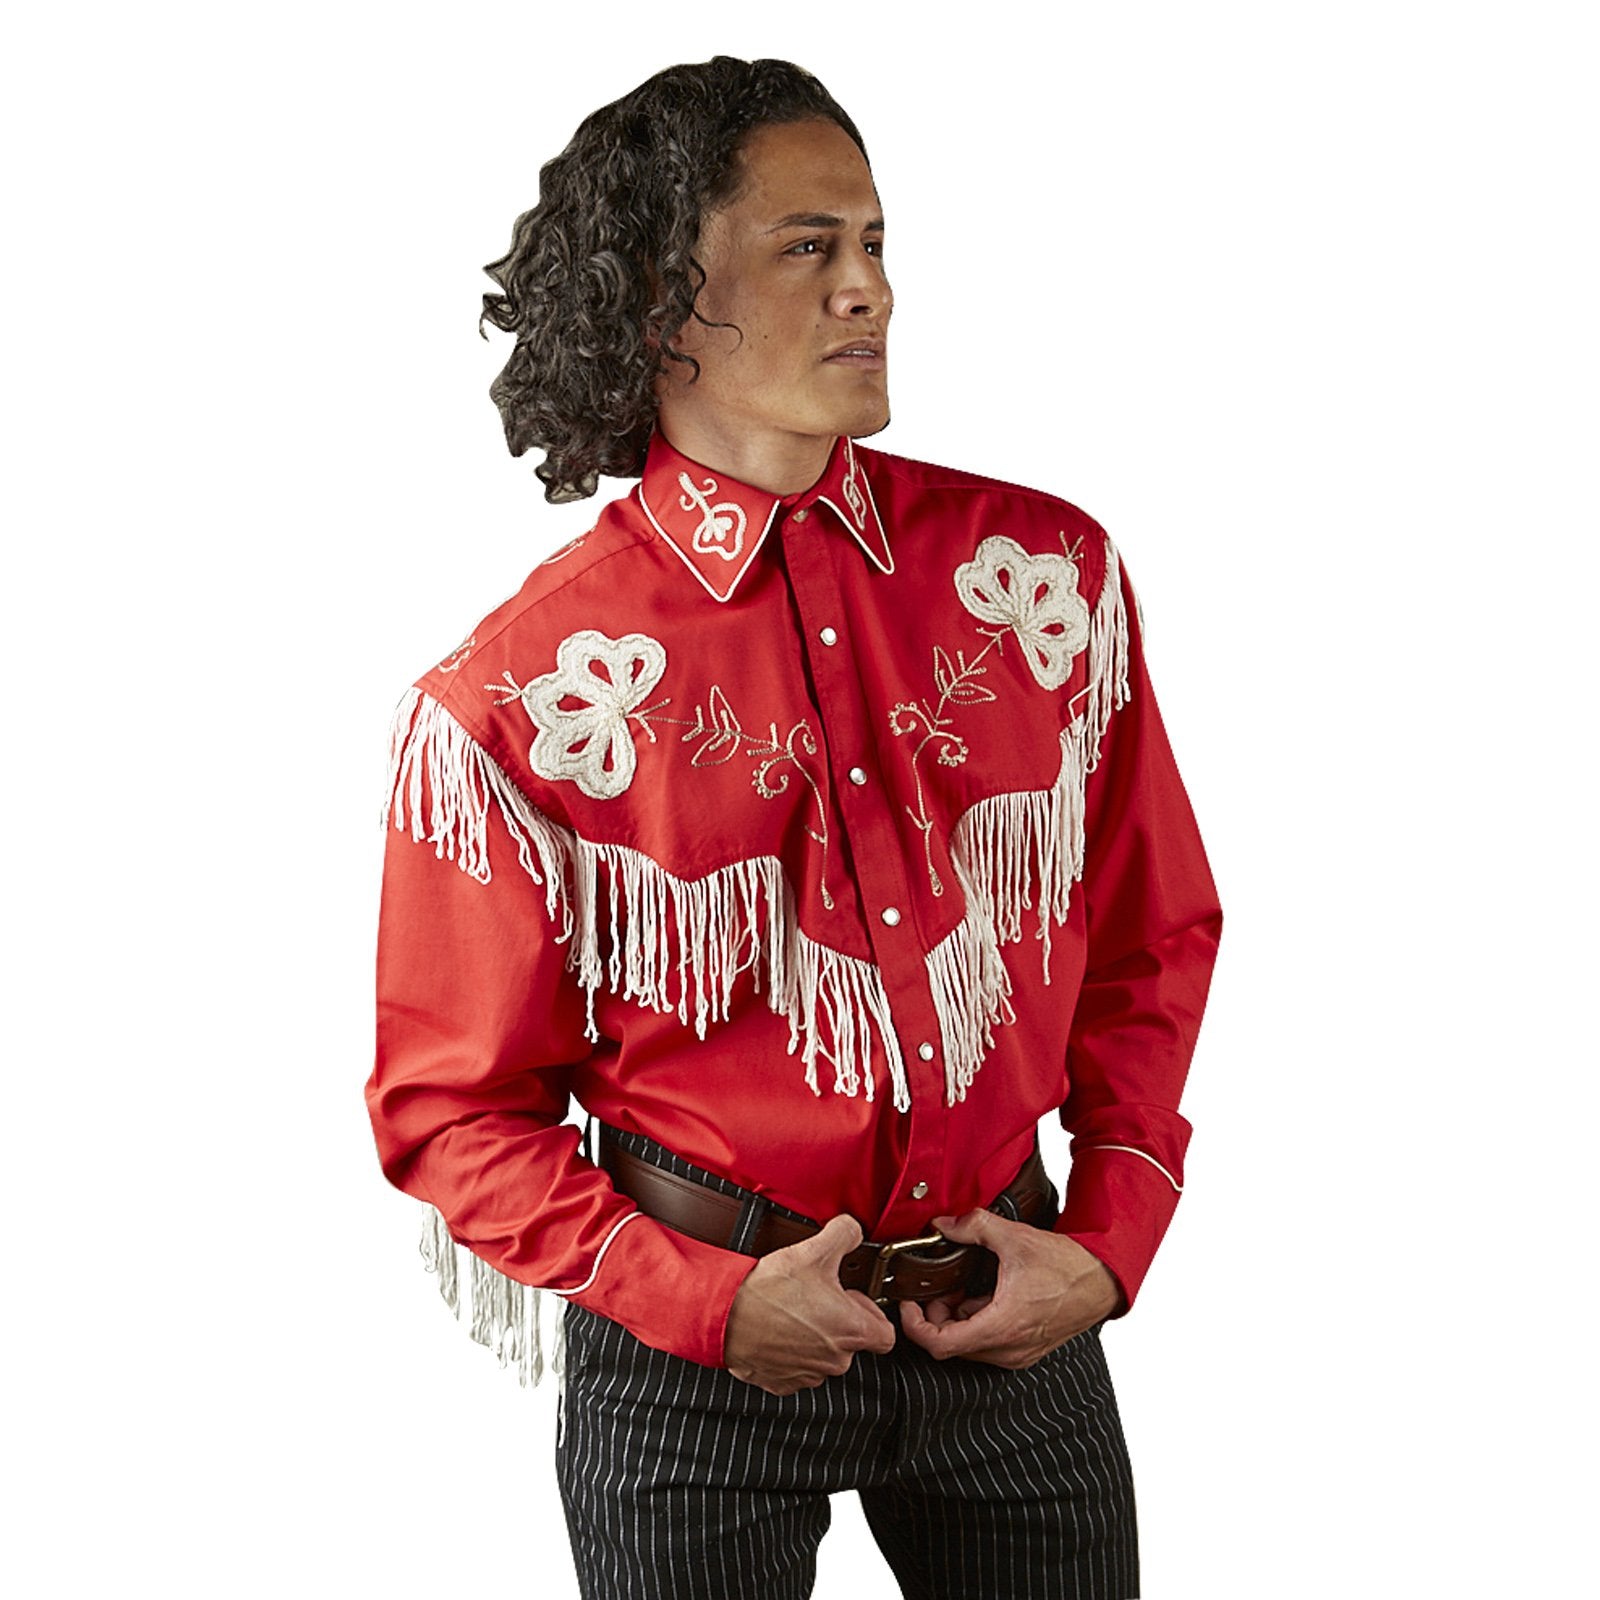 Rockmount Ranch Wear Men's Fringe Western Shirt Red Front